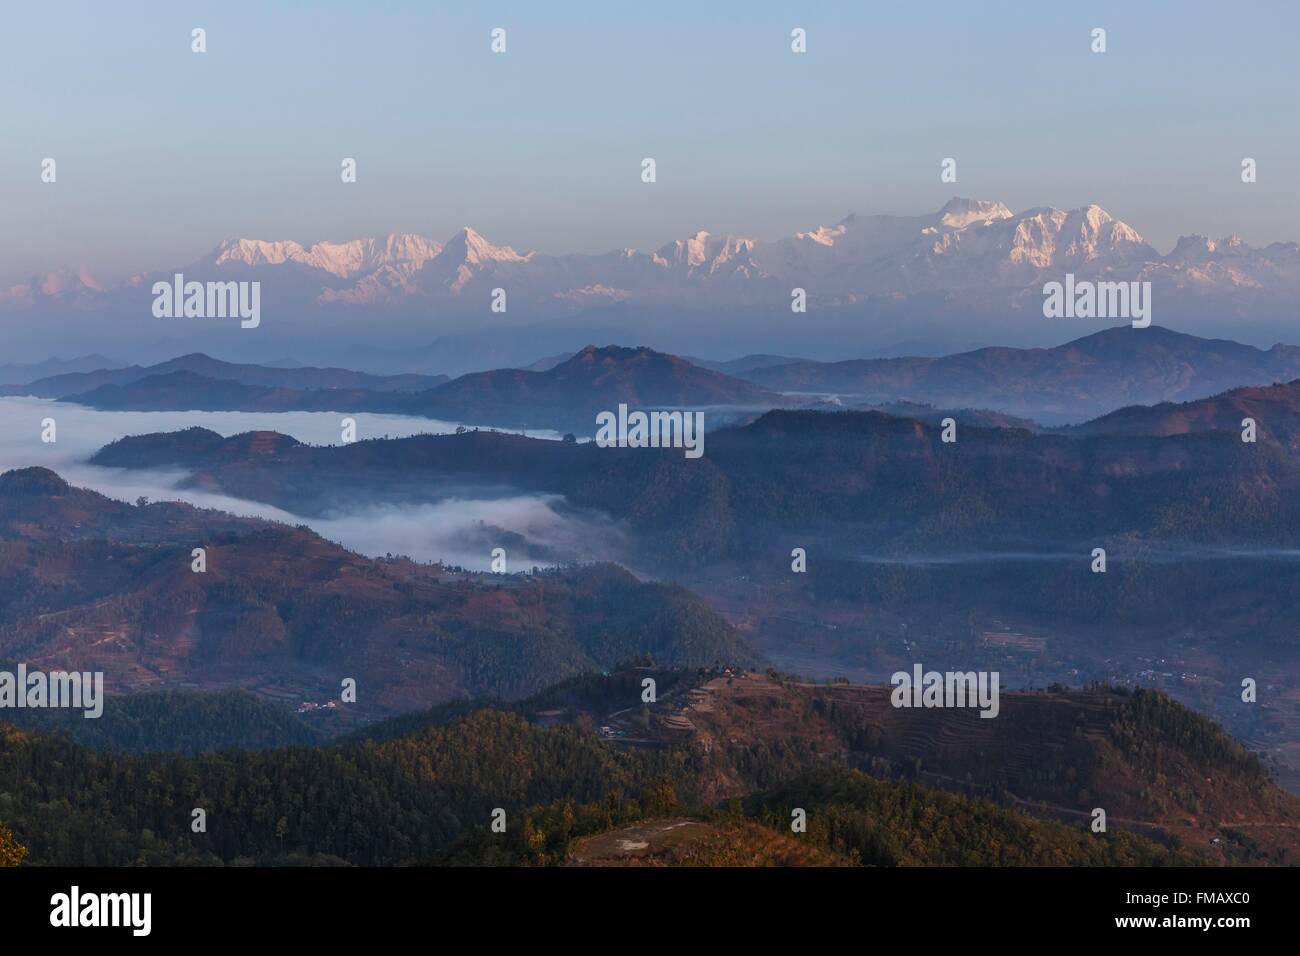 Nepal, Gandaki zone, Bandipur, Himalaya mountains and mist in the valley at sunrise Stock Photo